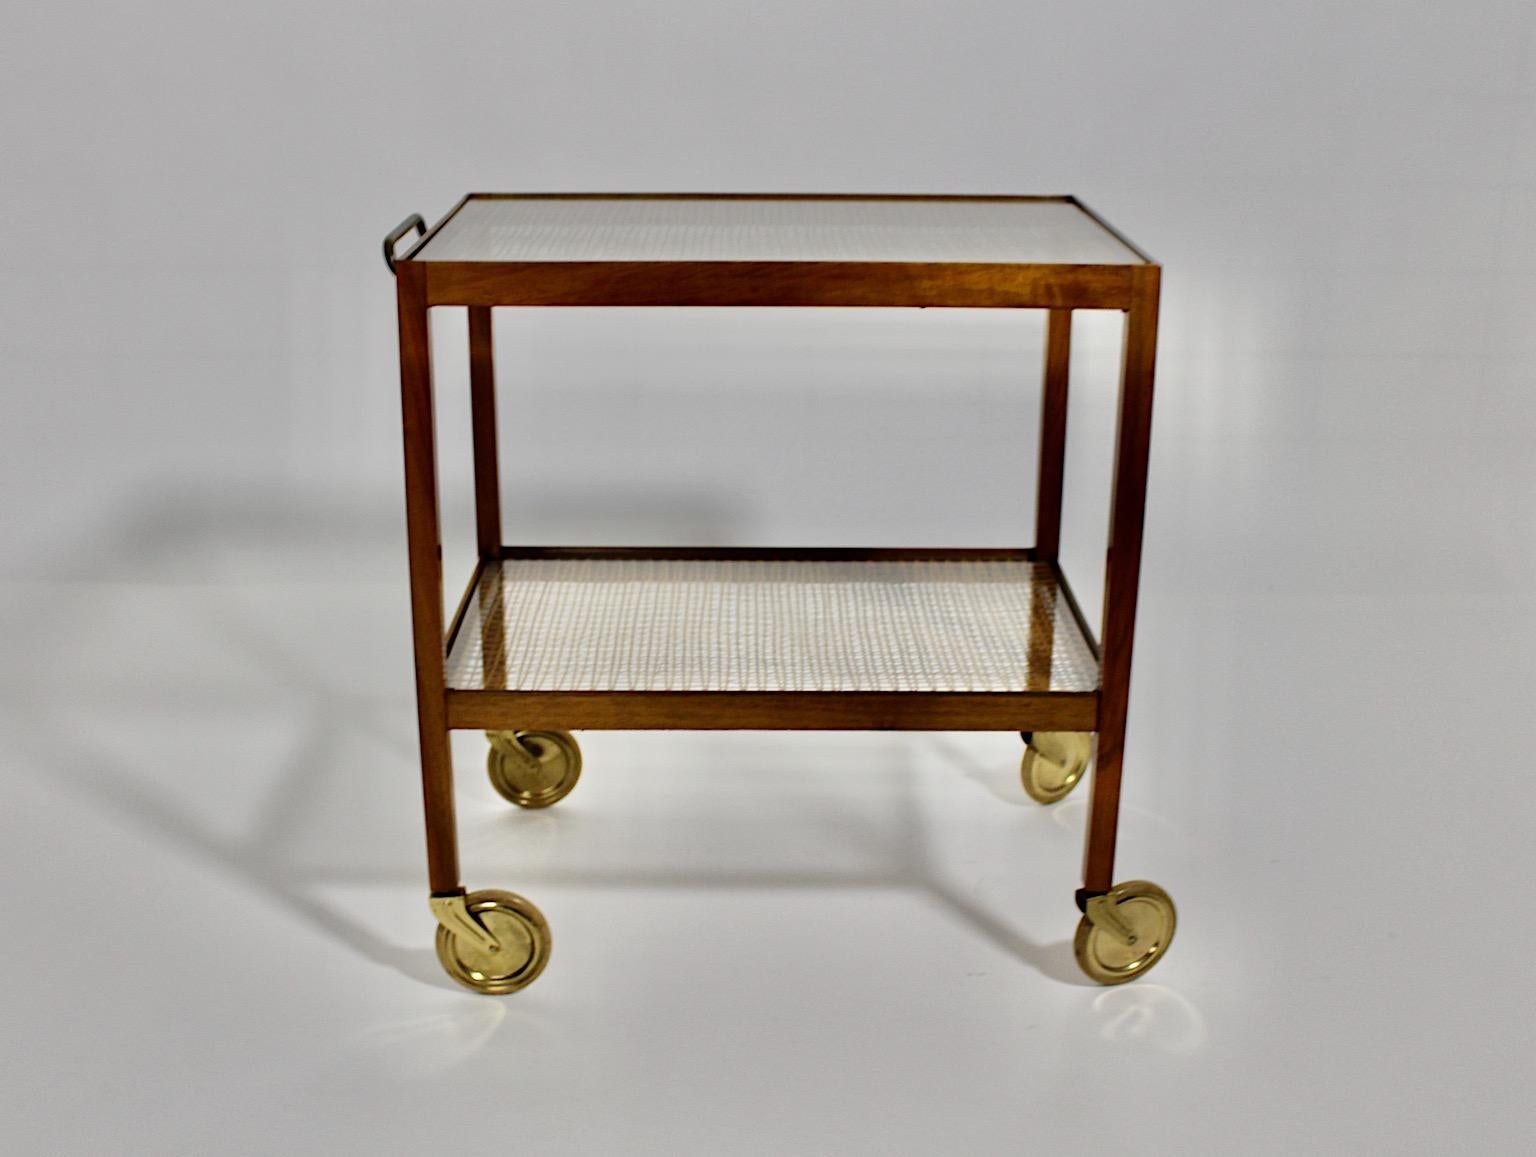 Art Deco Vintage Walnut Brass Bar Cart or Serving Table circa 1935 Austria For Sale 2